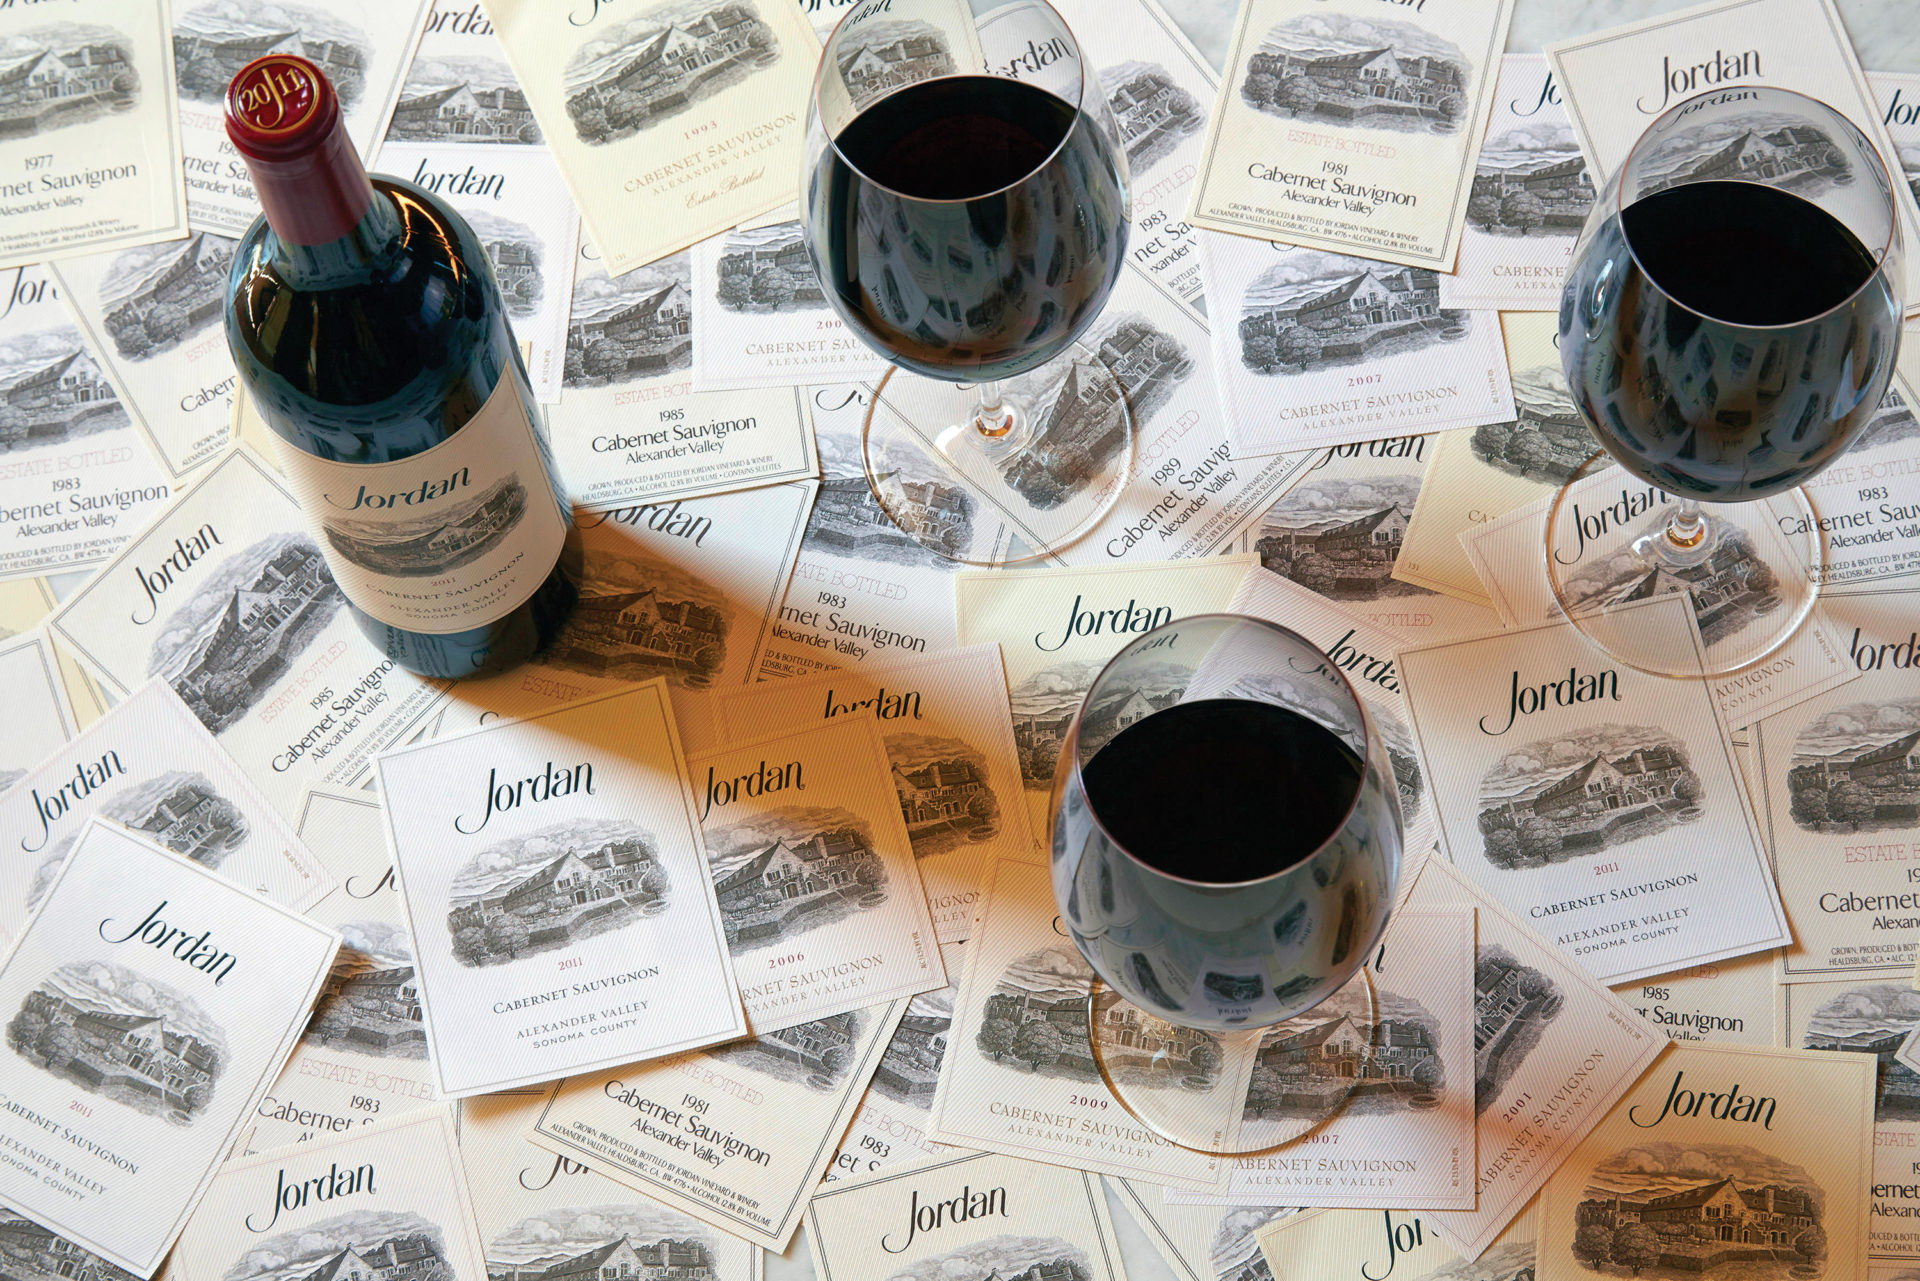 Jordan labels, bottle and glasses of Cabernet Sauvignon